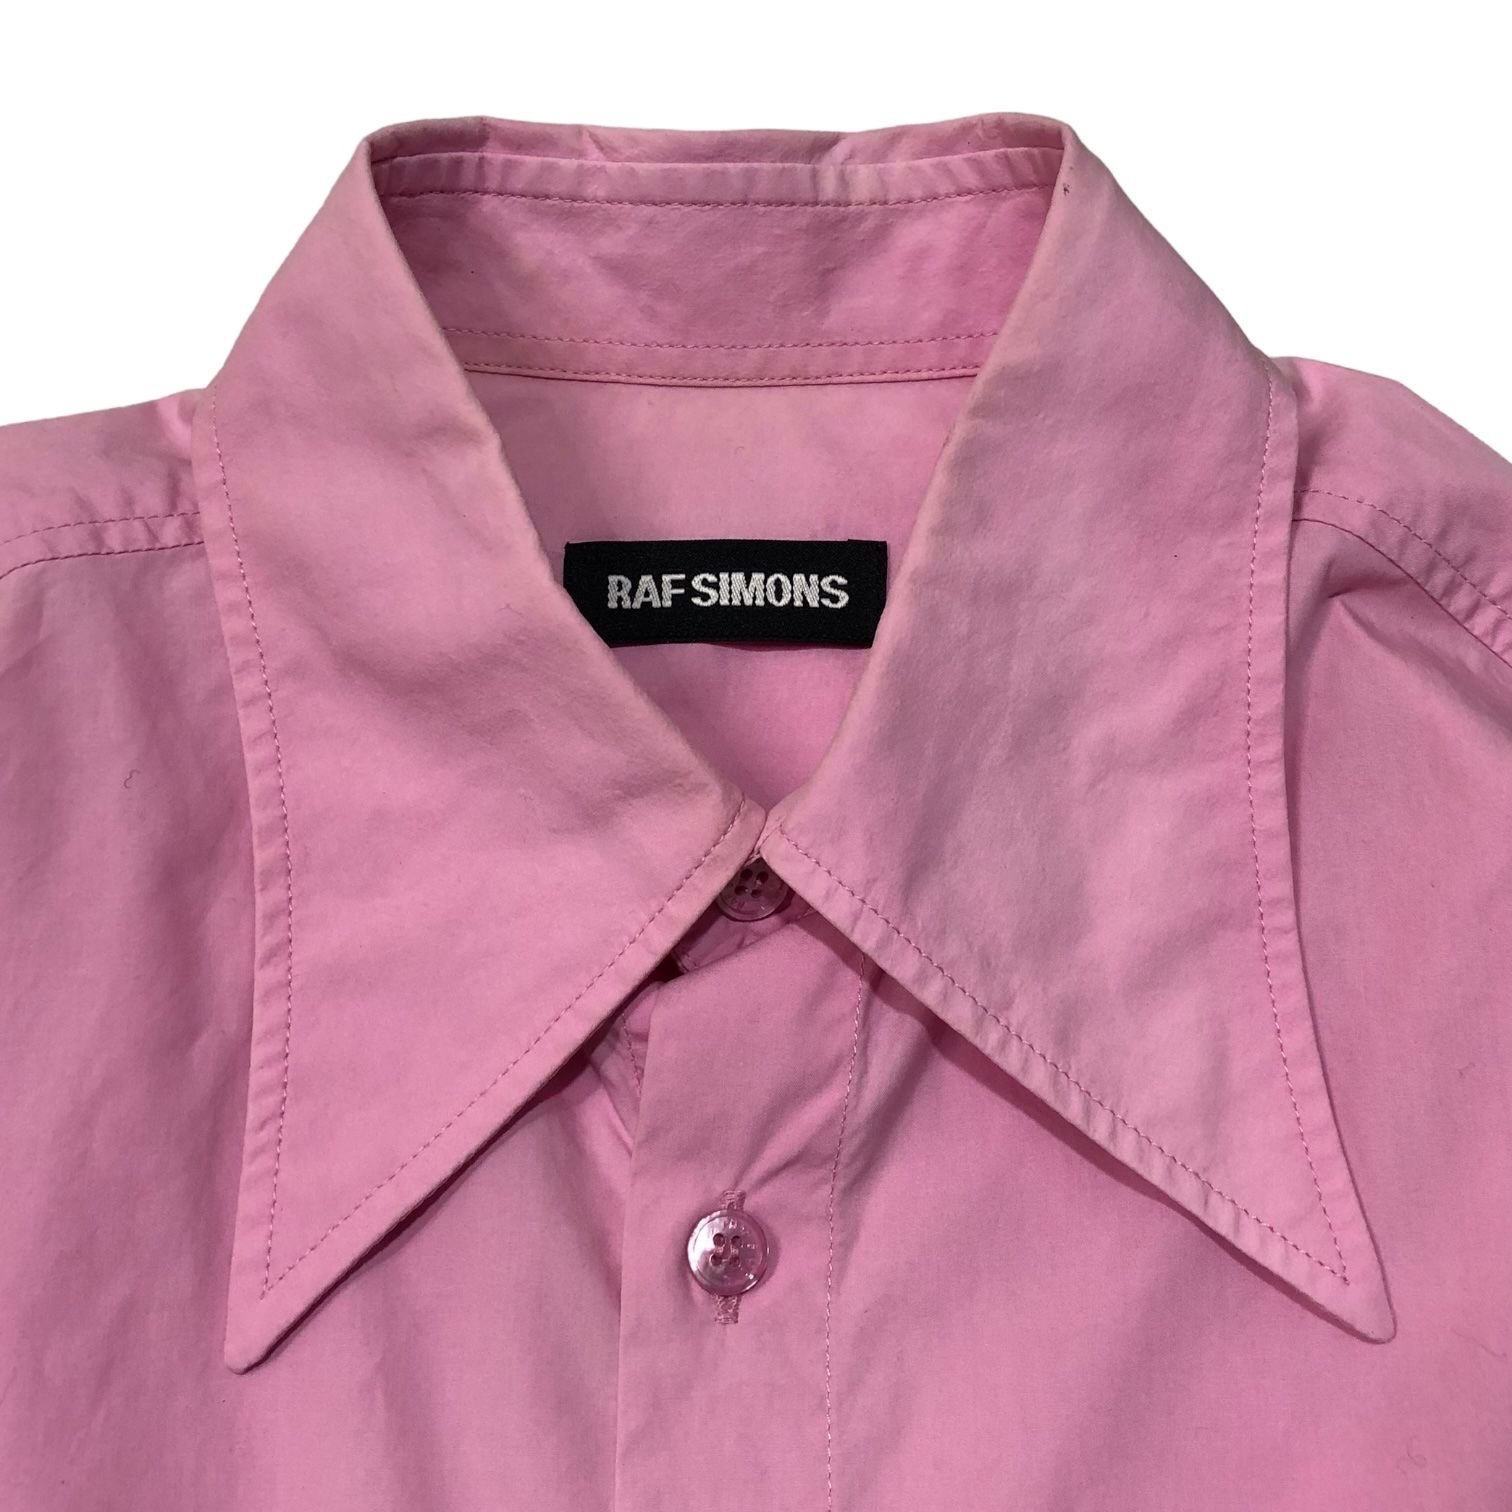 RAF SIMONS(ラフシモンズ) super long sleeve shirt スーパー ロングスリーブ シャツ 44(S程度) ピンク 長袖  Rロゴ 刺繍 アーカイブ